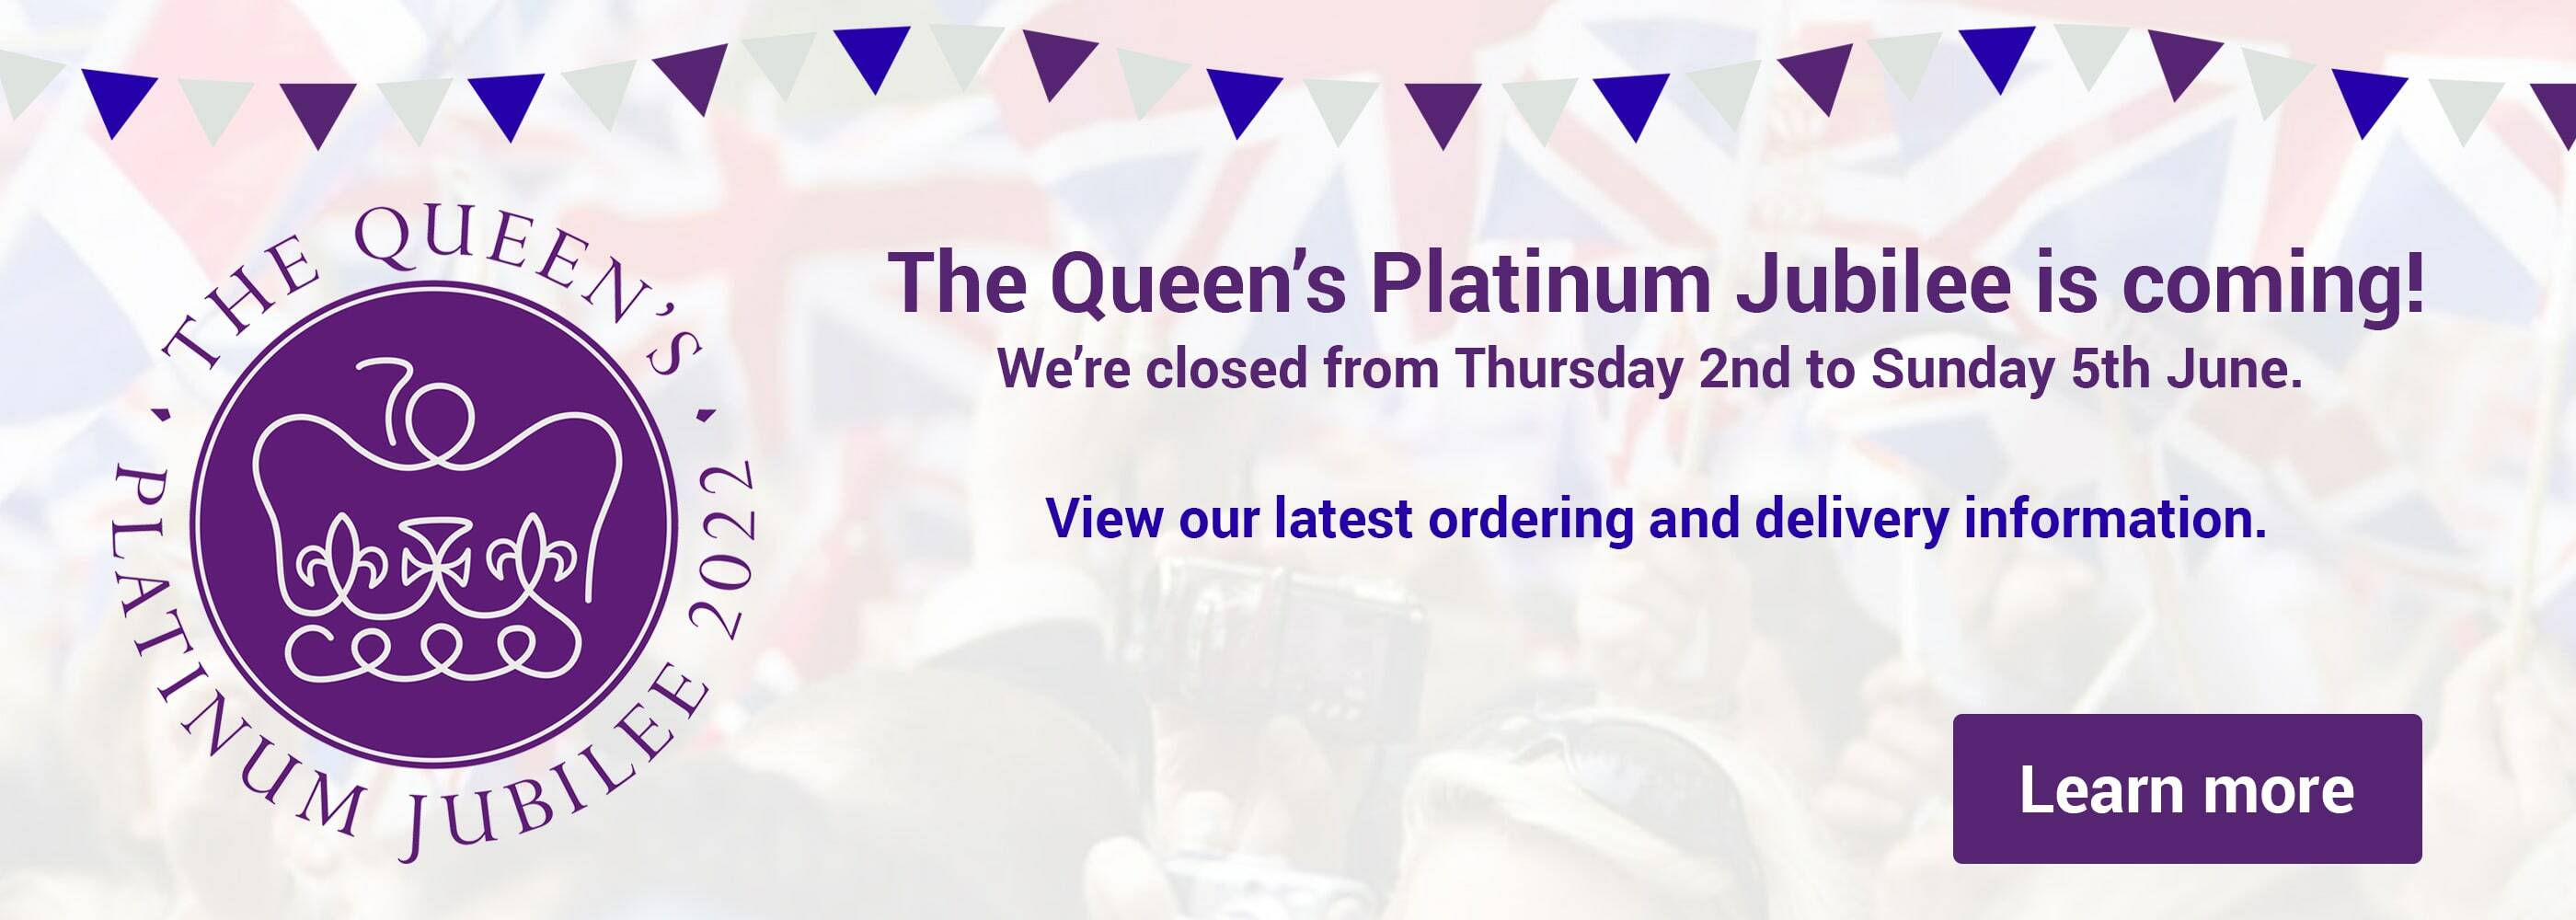 The Queen's Platinum Jubilee is coming!